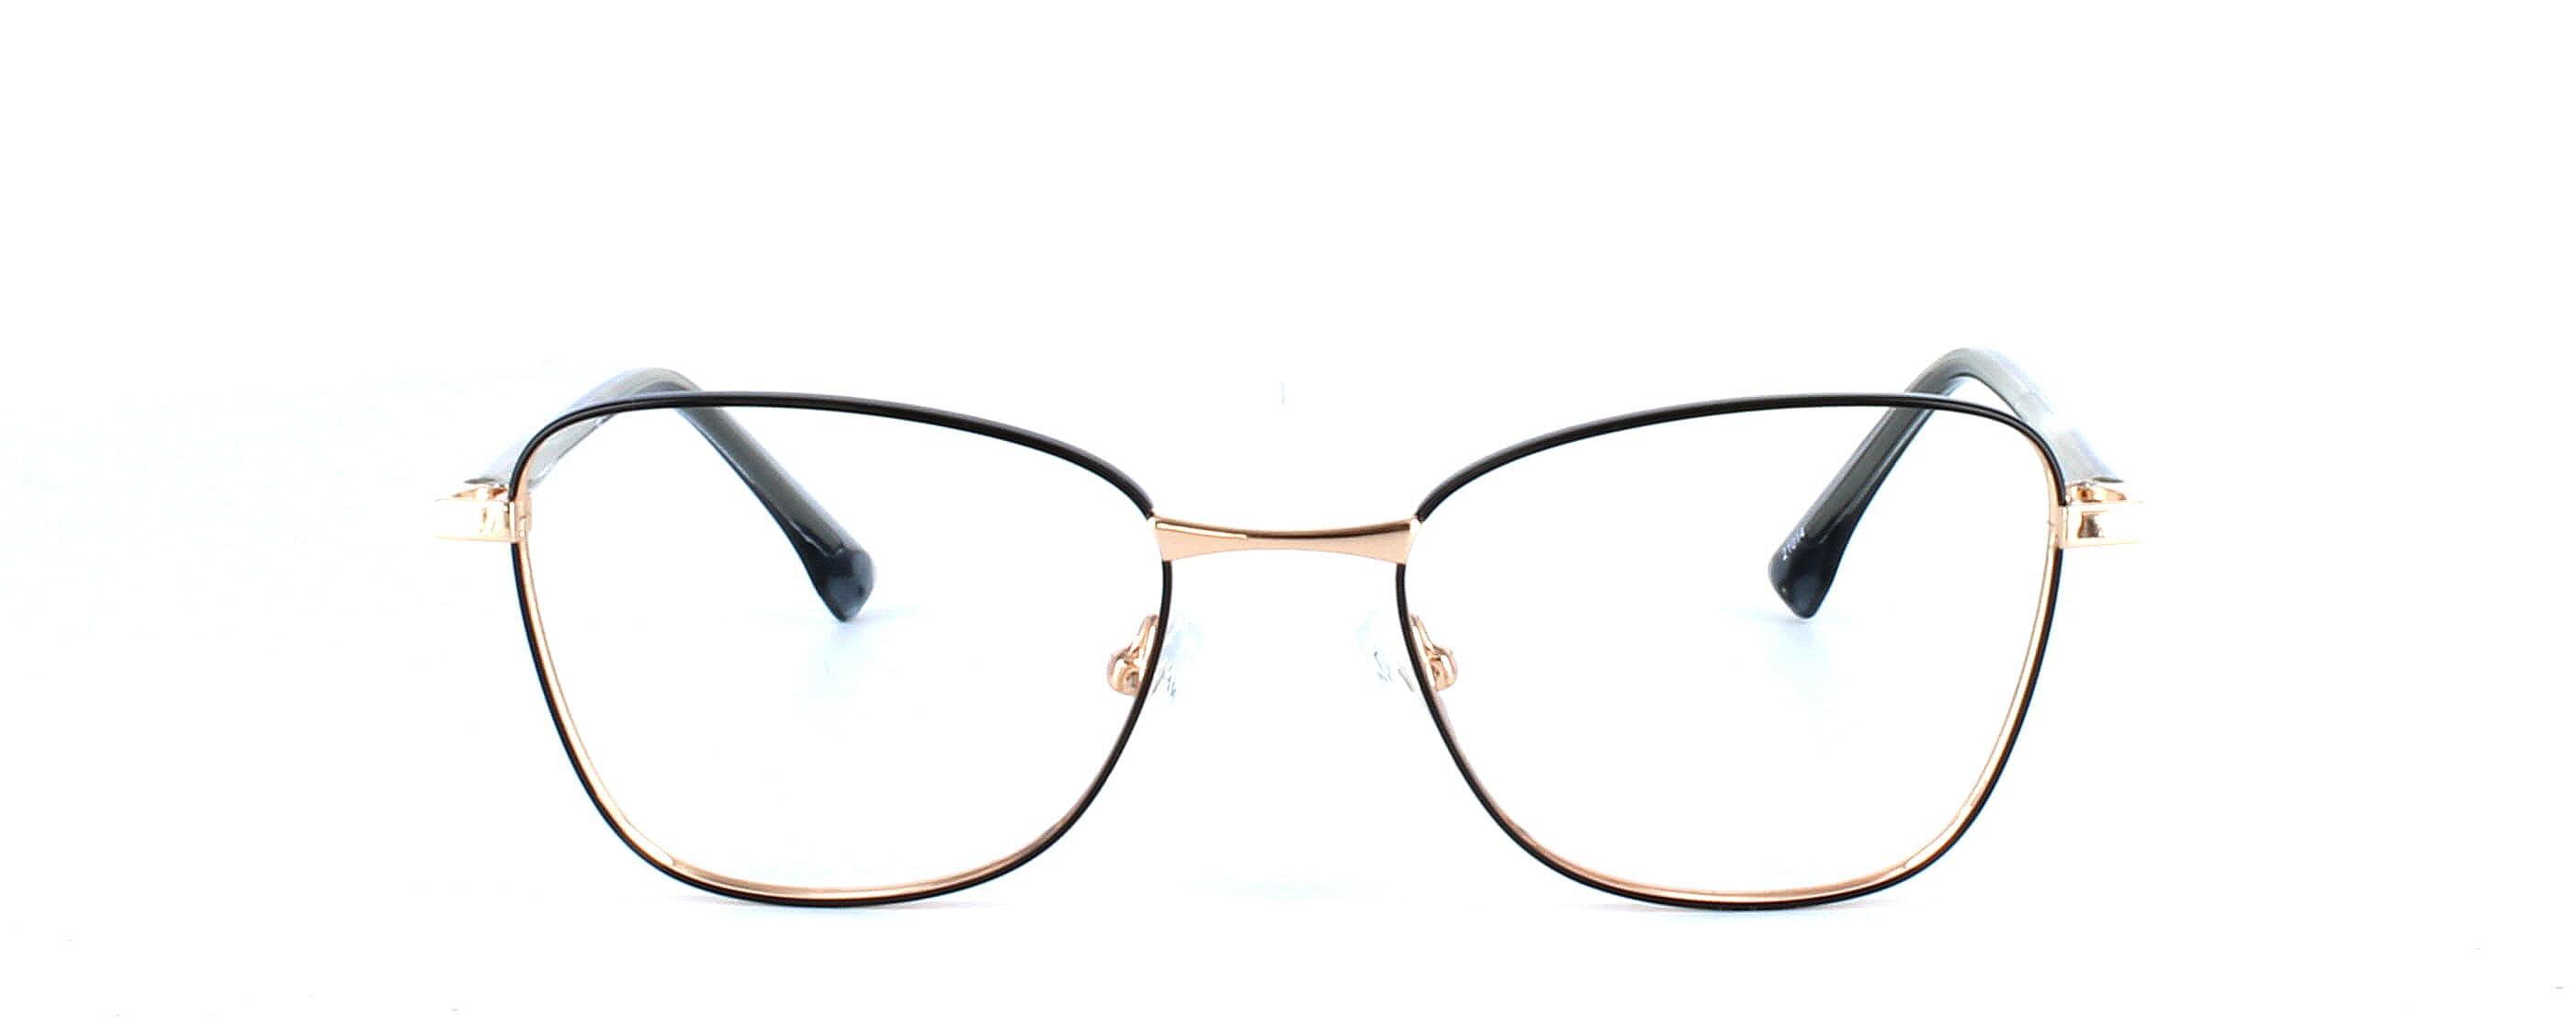 Serpens - black & gold - 2-tone metal cat eye shaped glasses frame - image view 5